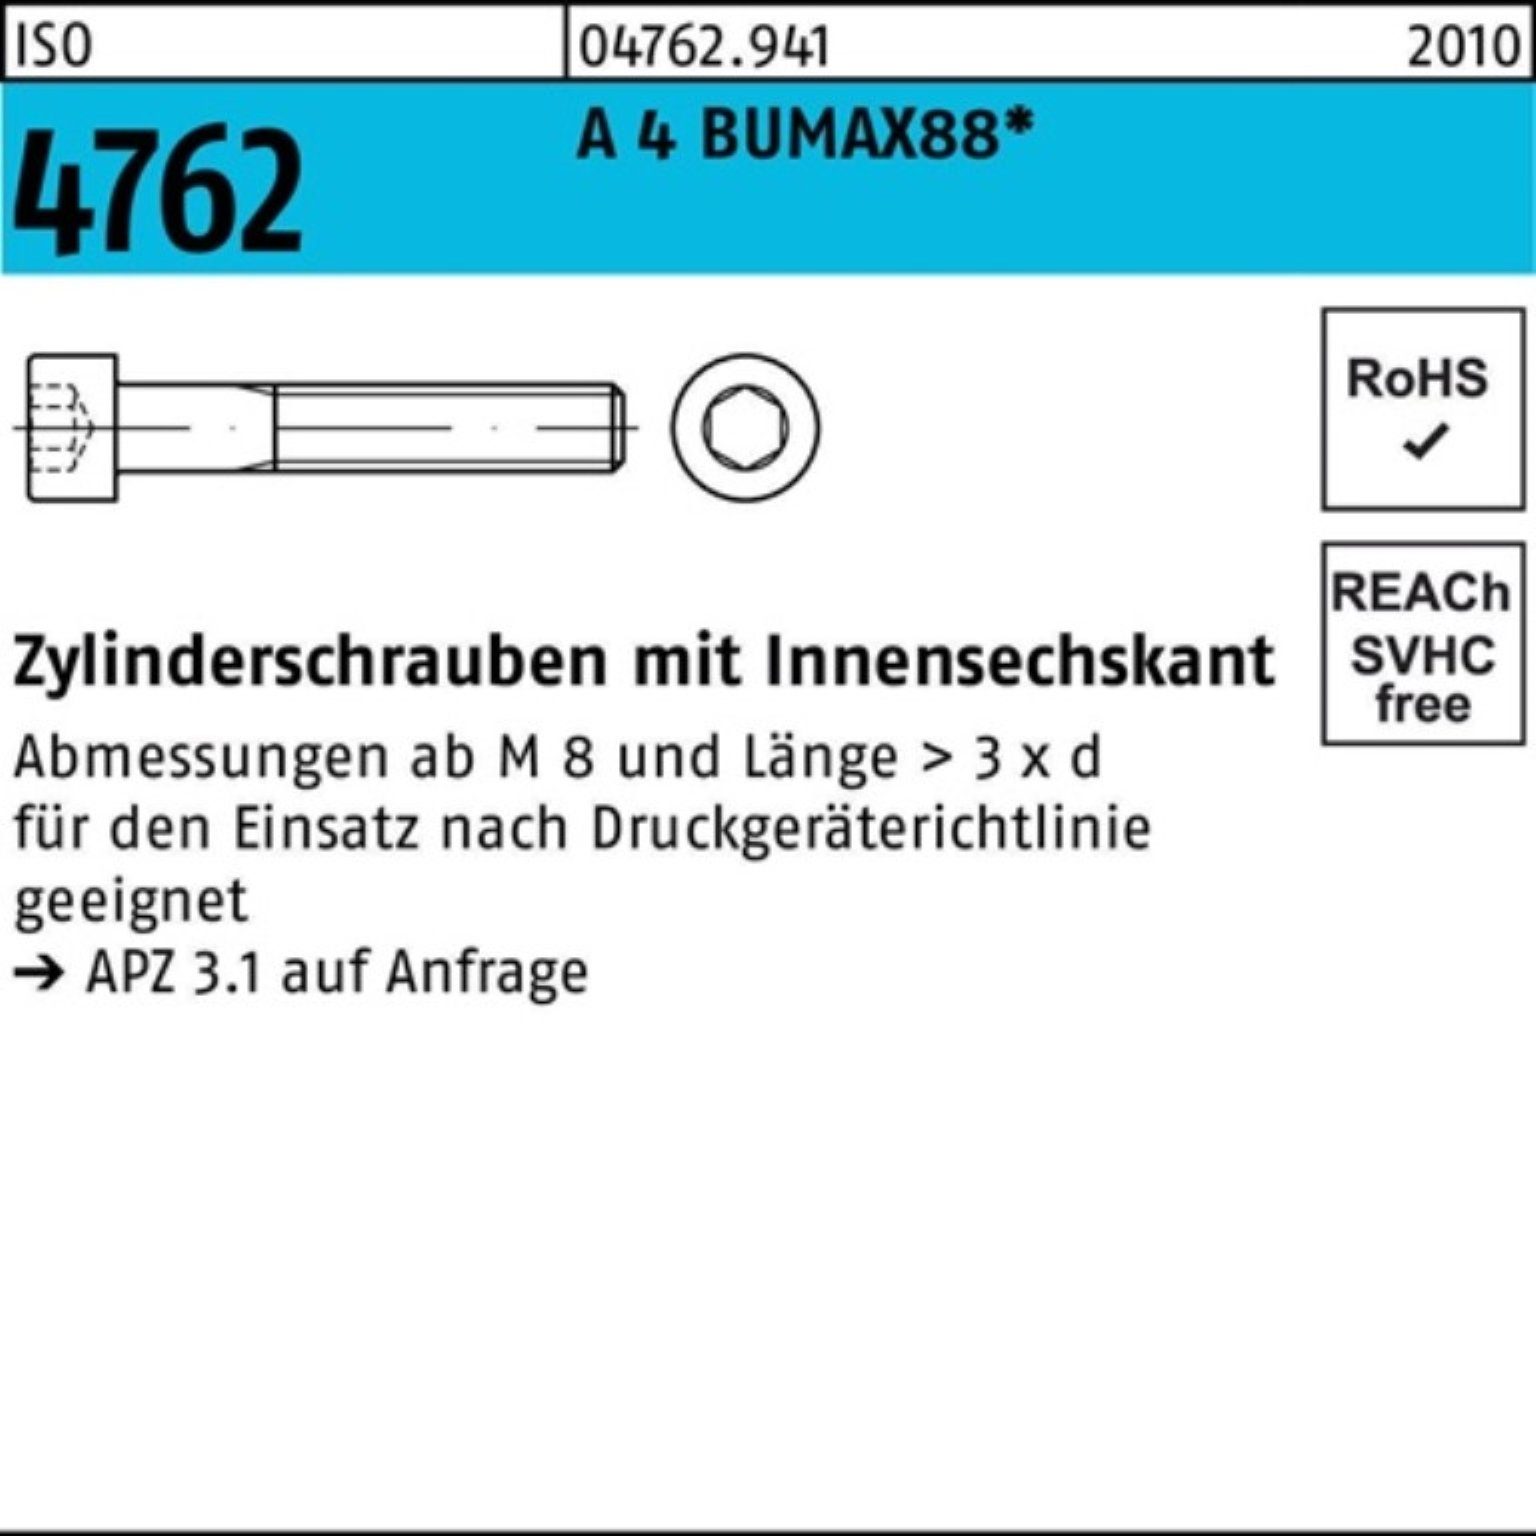 Bufab Zylinderschraube 100er Pack A 4762 Zylinderschraube Innen-6kt 45 ISO BUMAX88 M16x 25 4